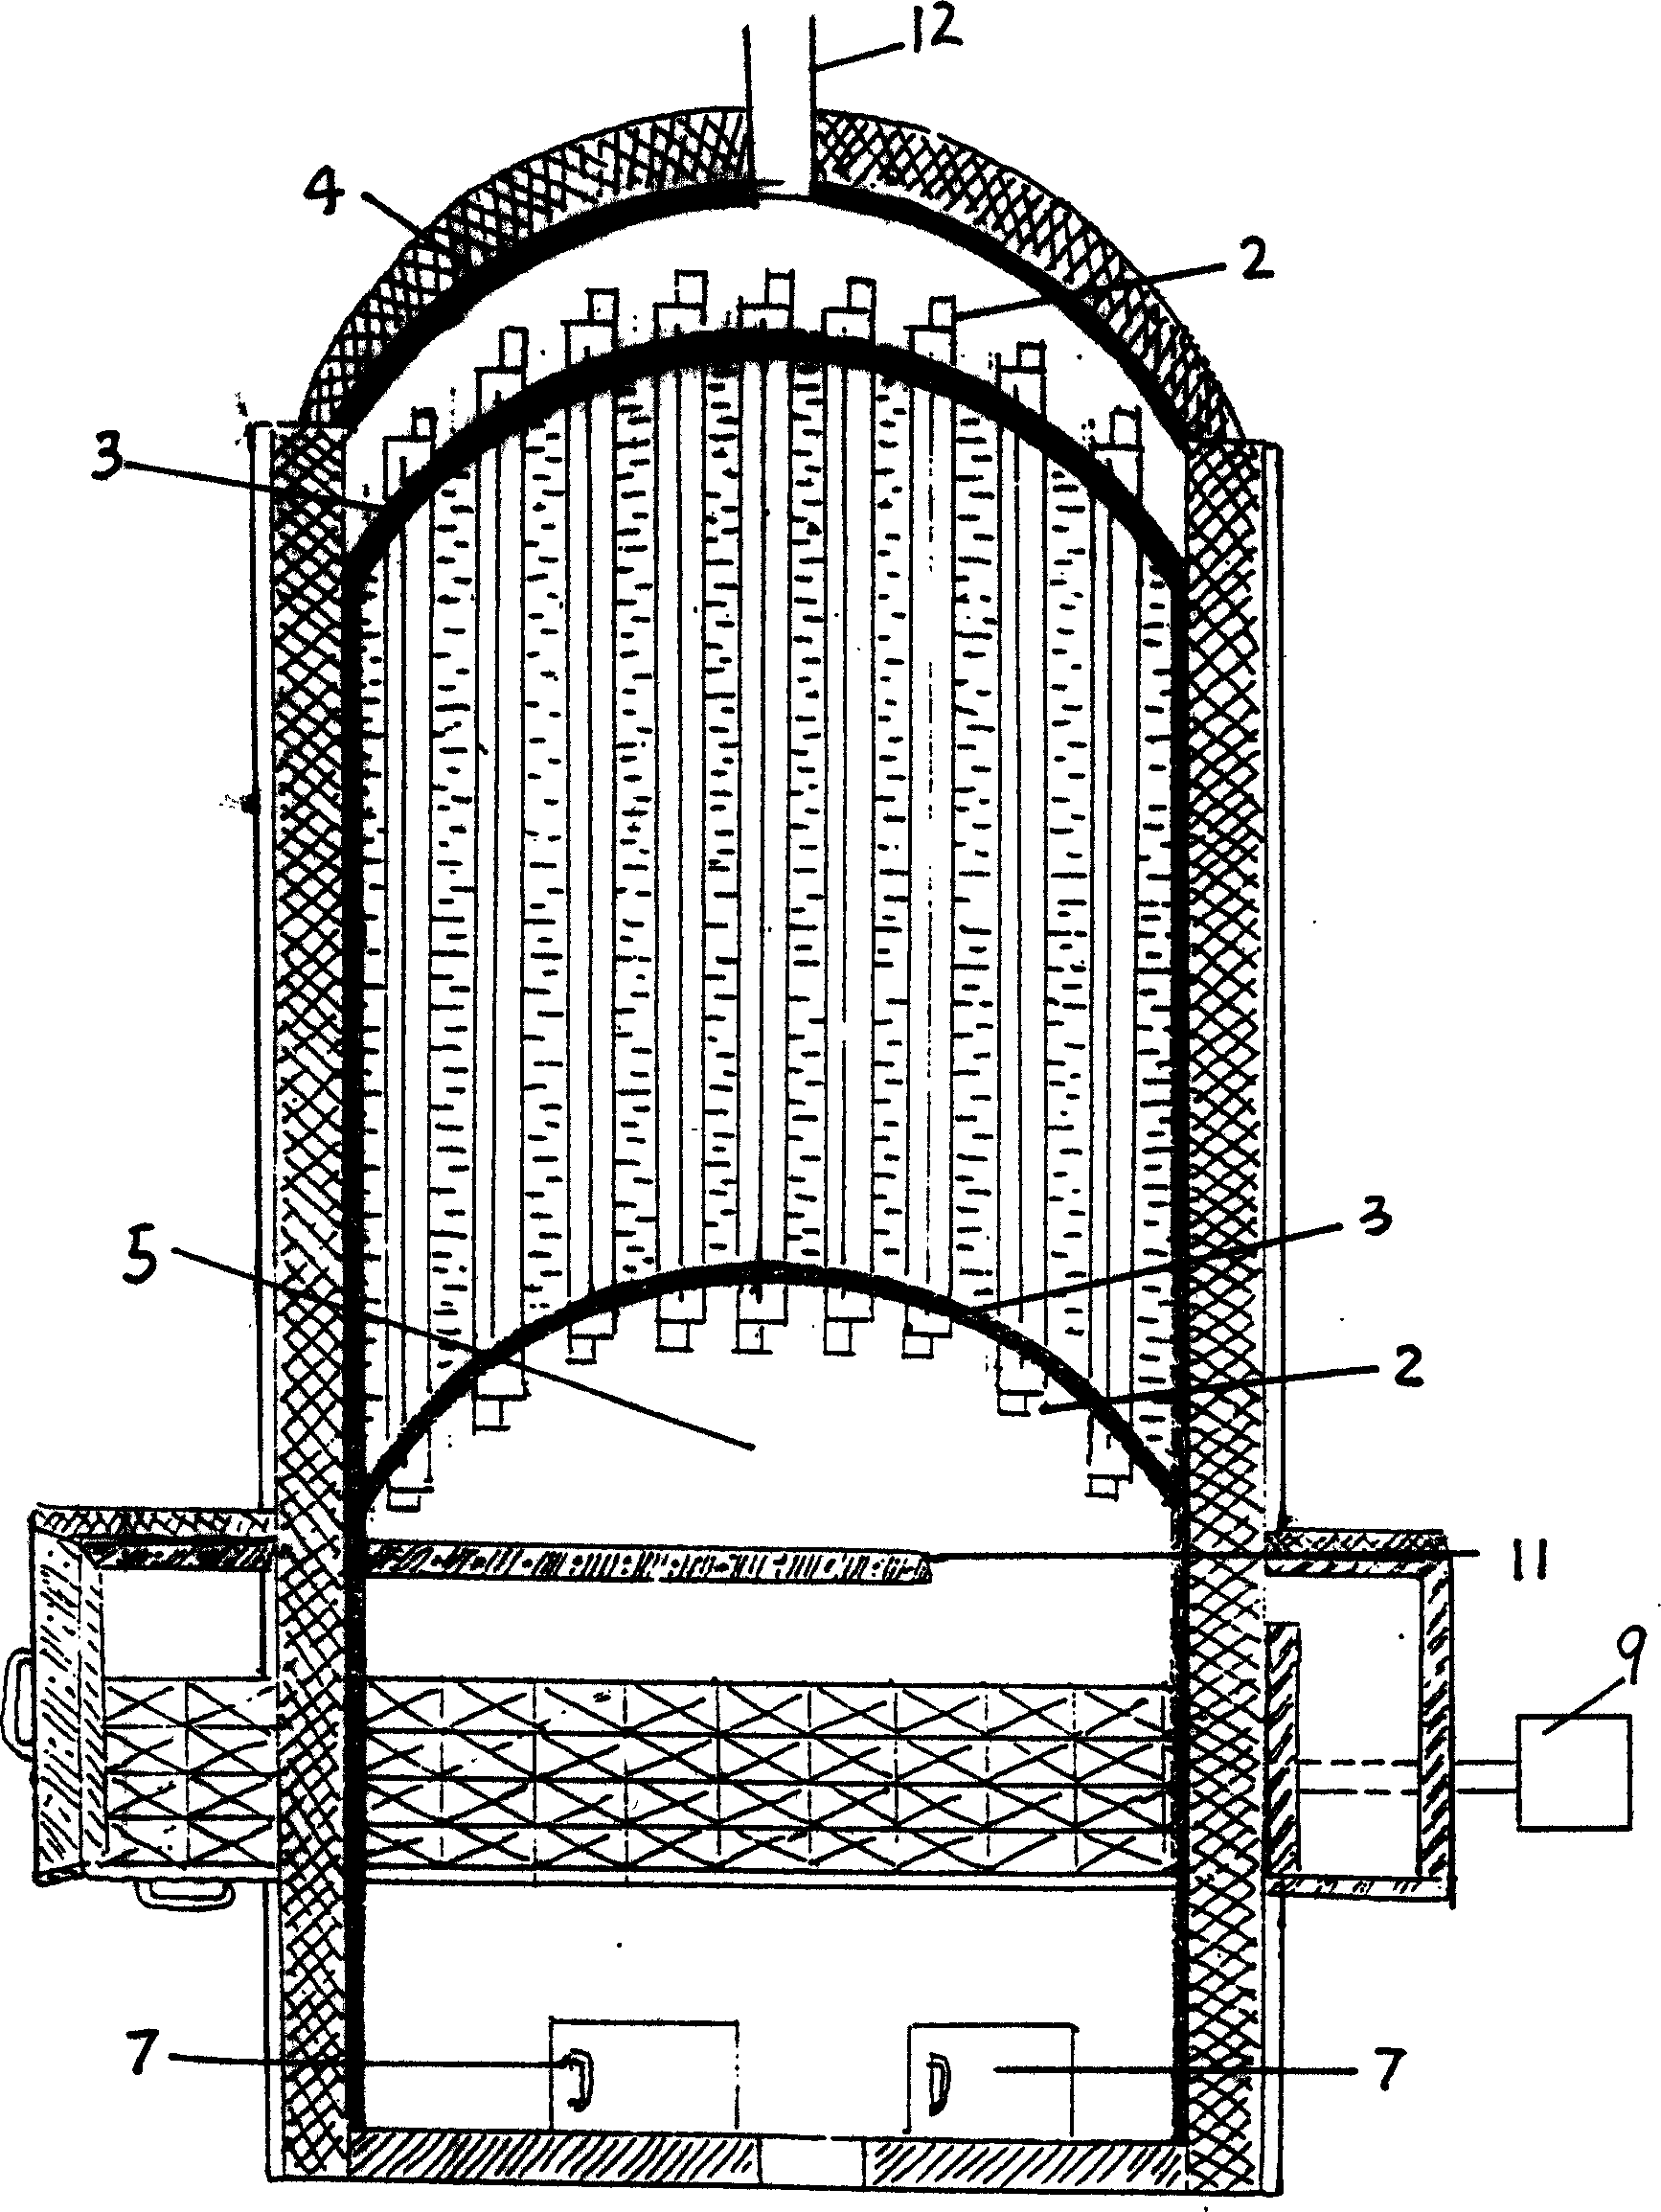 Coal firing boiler with N-shaped fire tubes